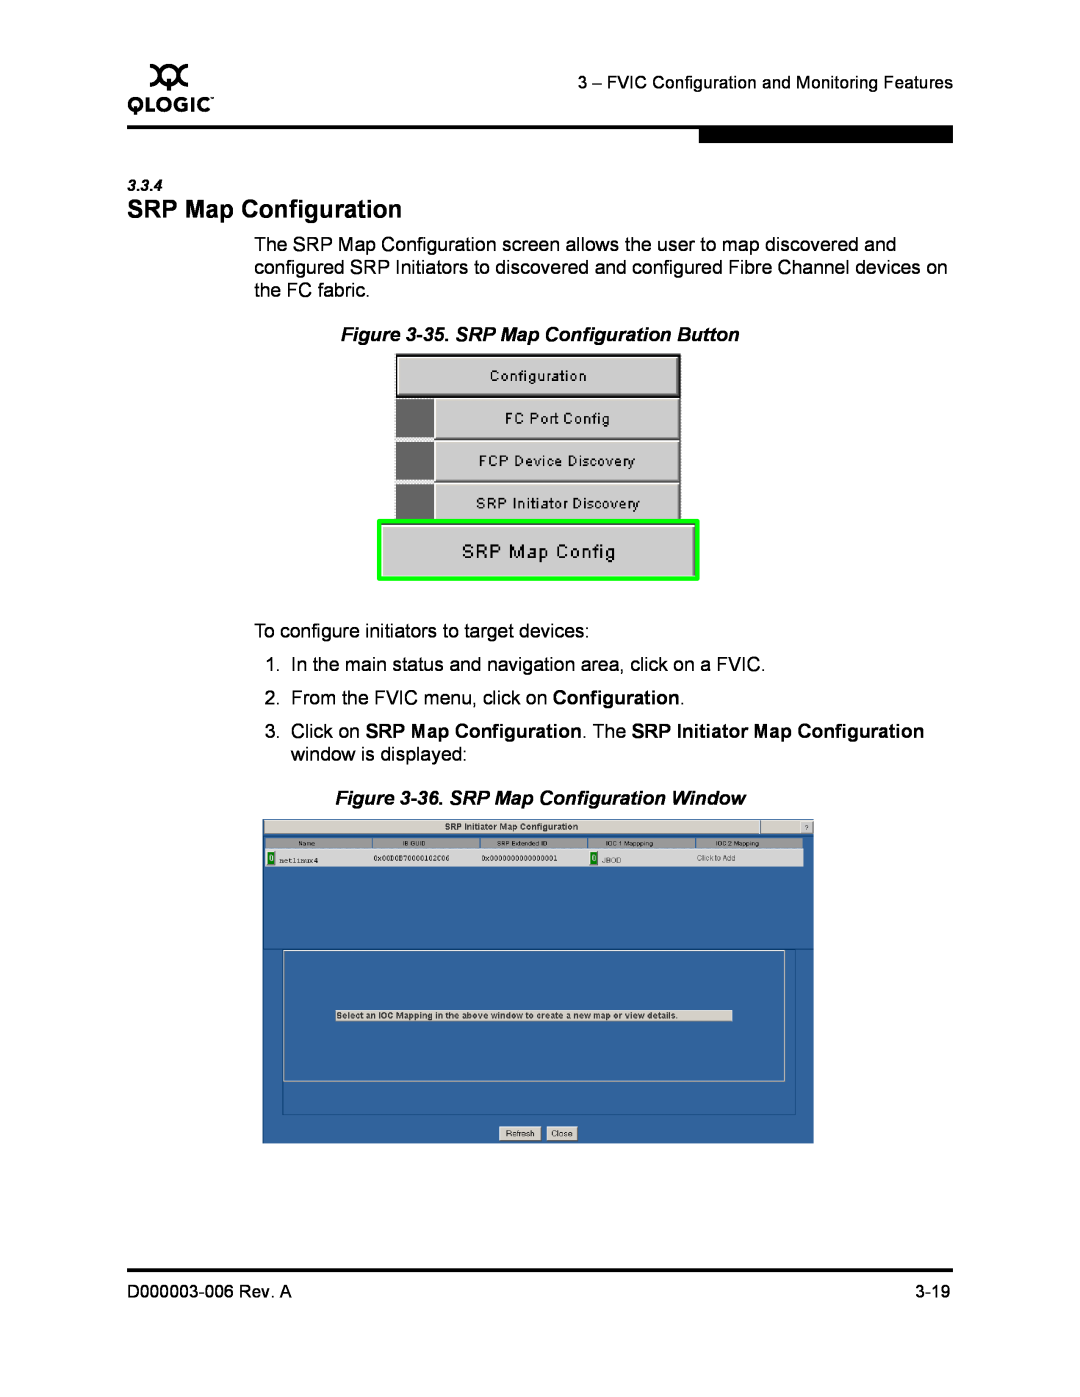 Q-Logic 9000 manual 35. SRP Map Configuration Button, 36. SRP Map Configuration Window 